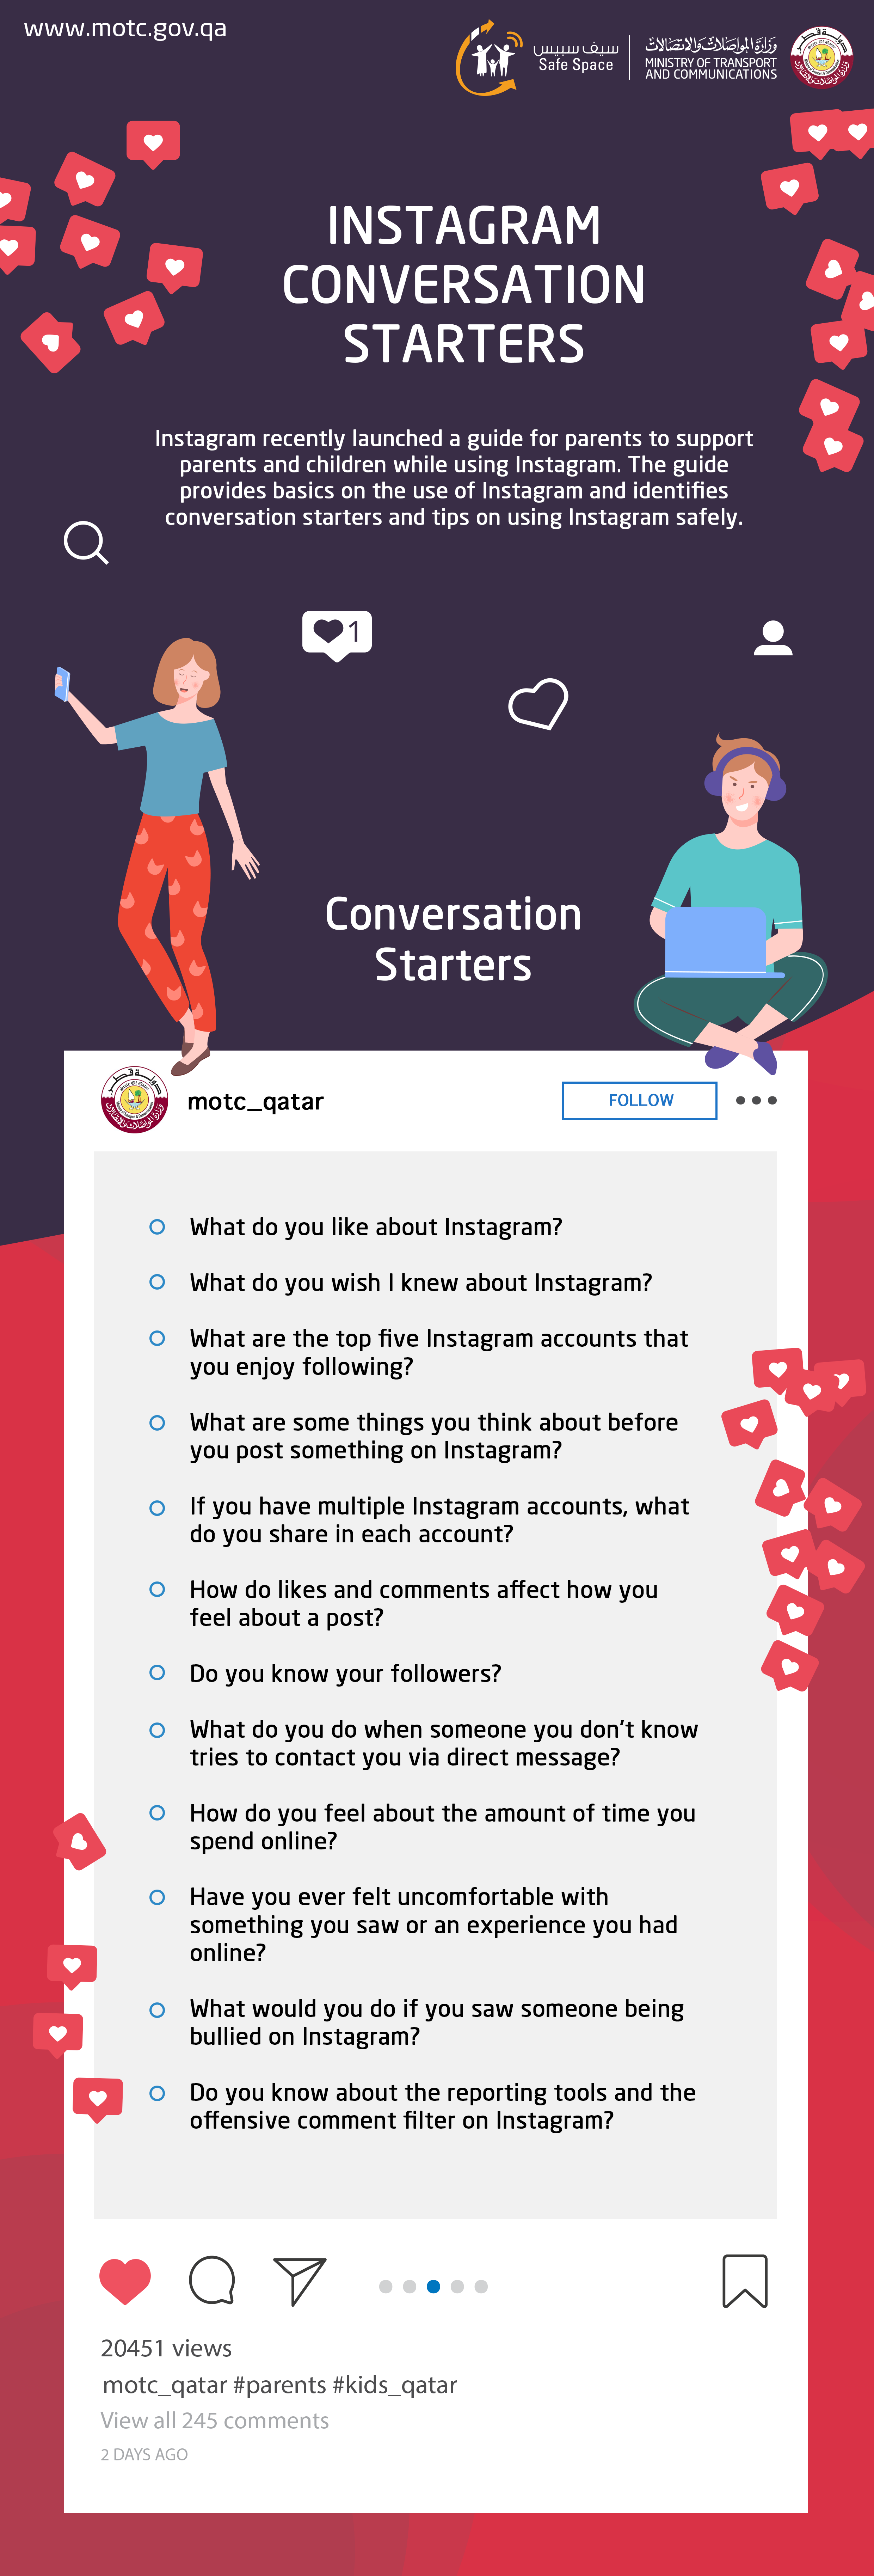 Instagram Conversation Starters | SafeSpace